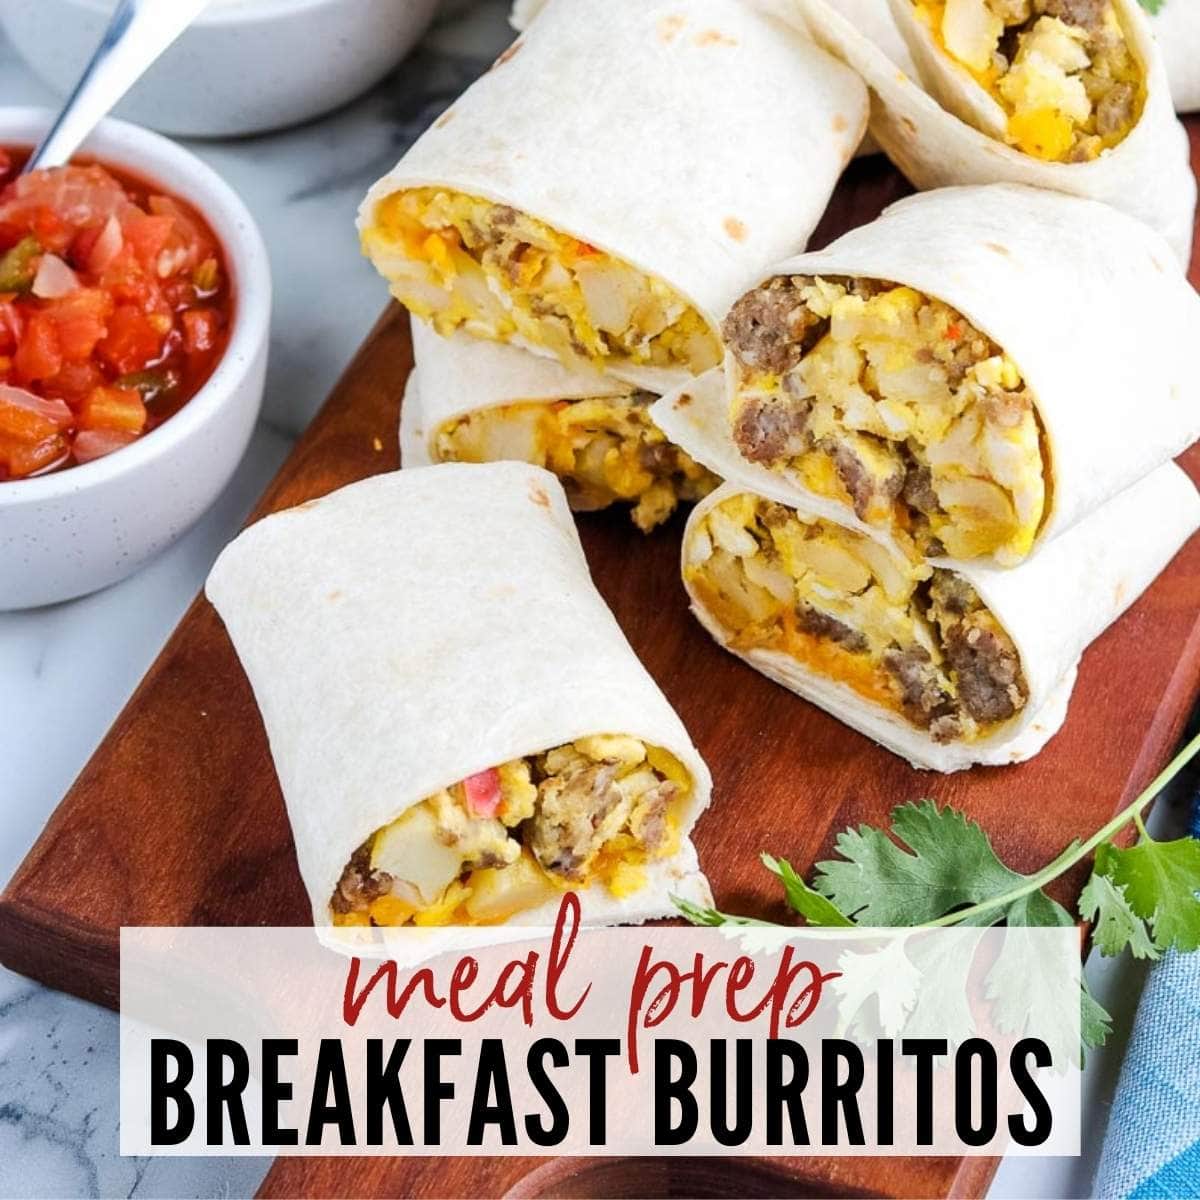 https://www.areinventedmom.com/wp-content/uploads/2021/07/Meal-Prep-Breakfast-Burritos-Feature.jpg